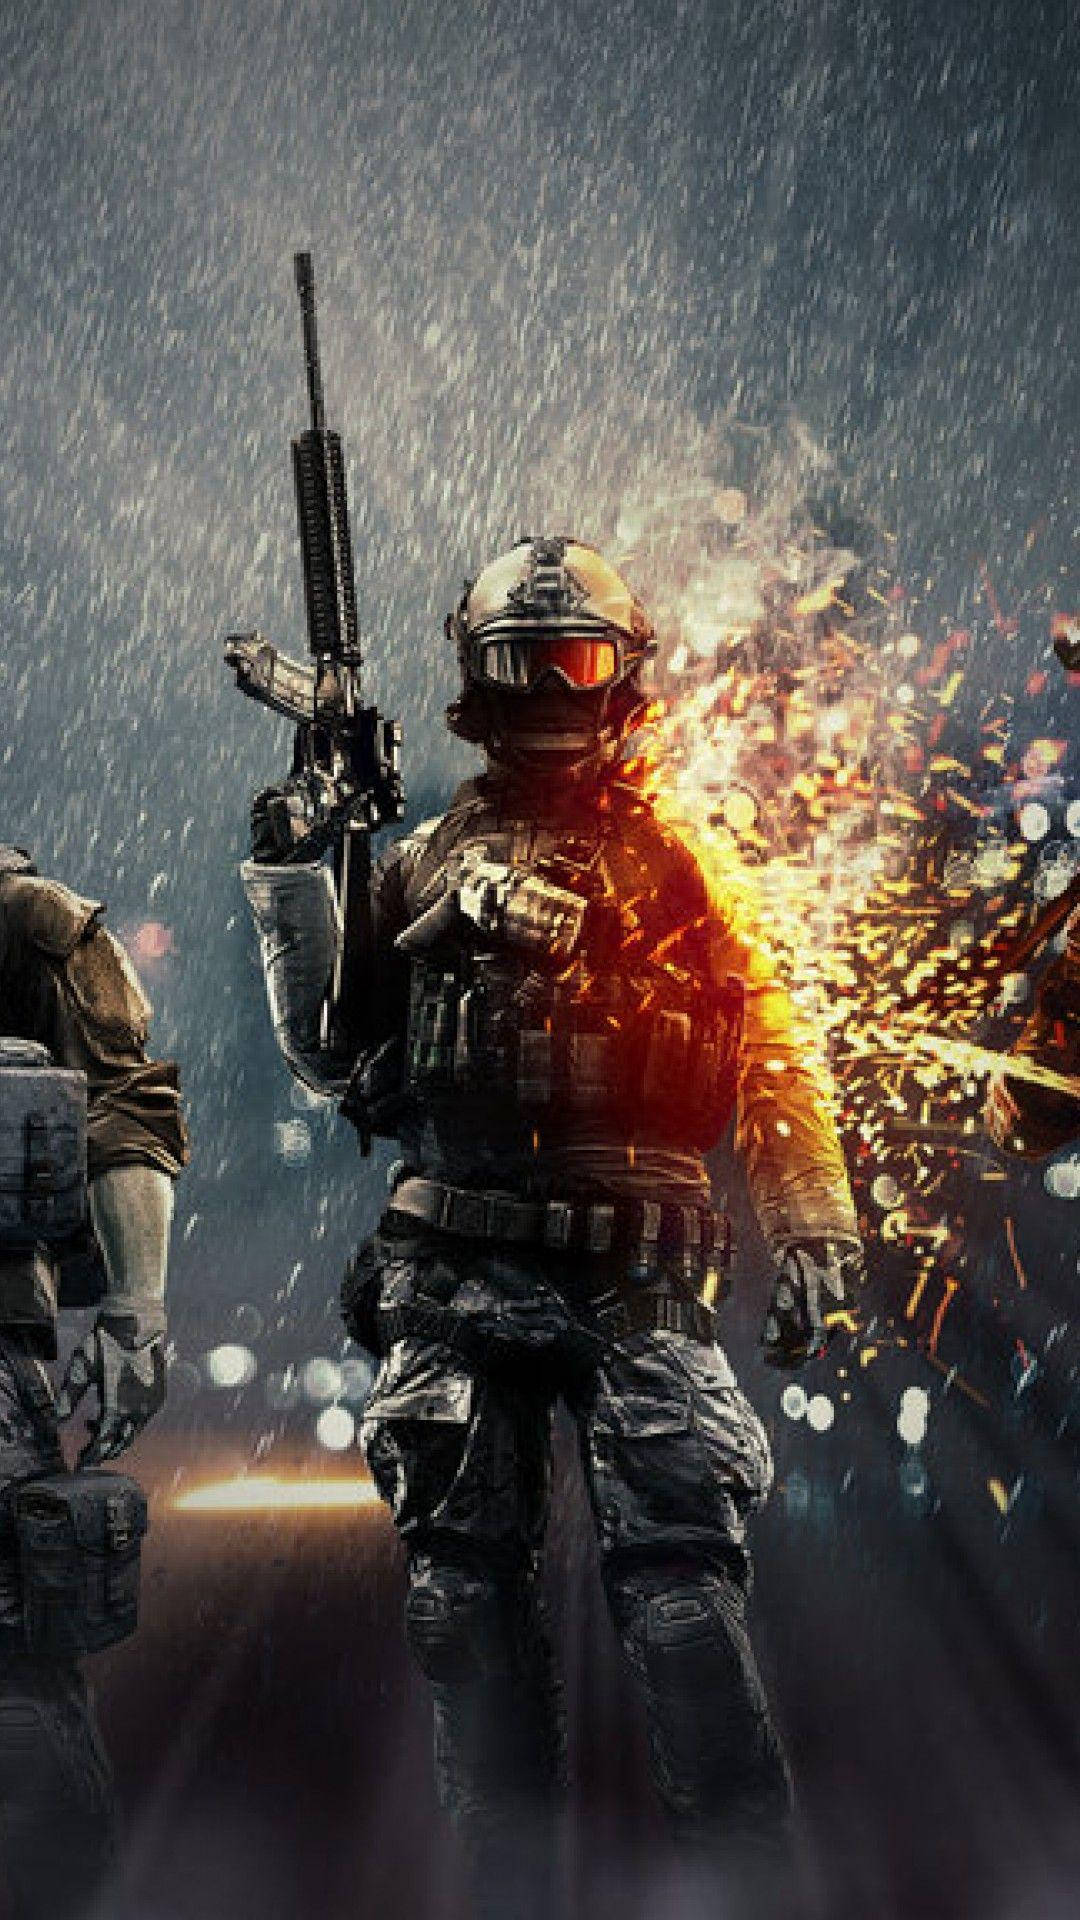 Intense Combat Scene in Battlefield 4 Mobile Game Wallpaper